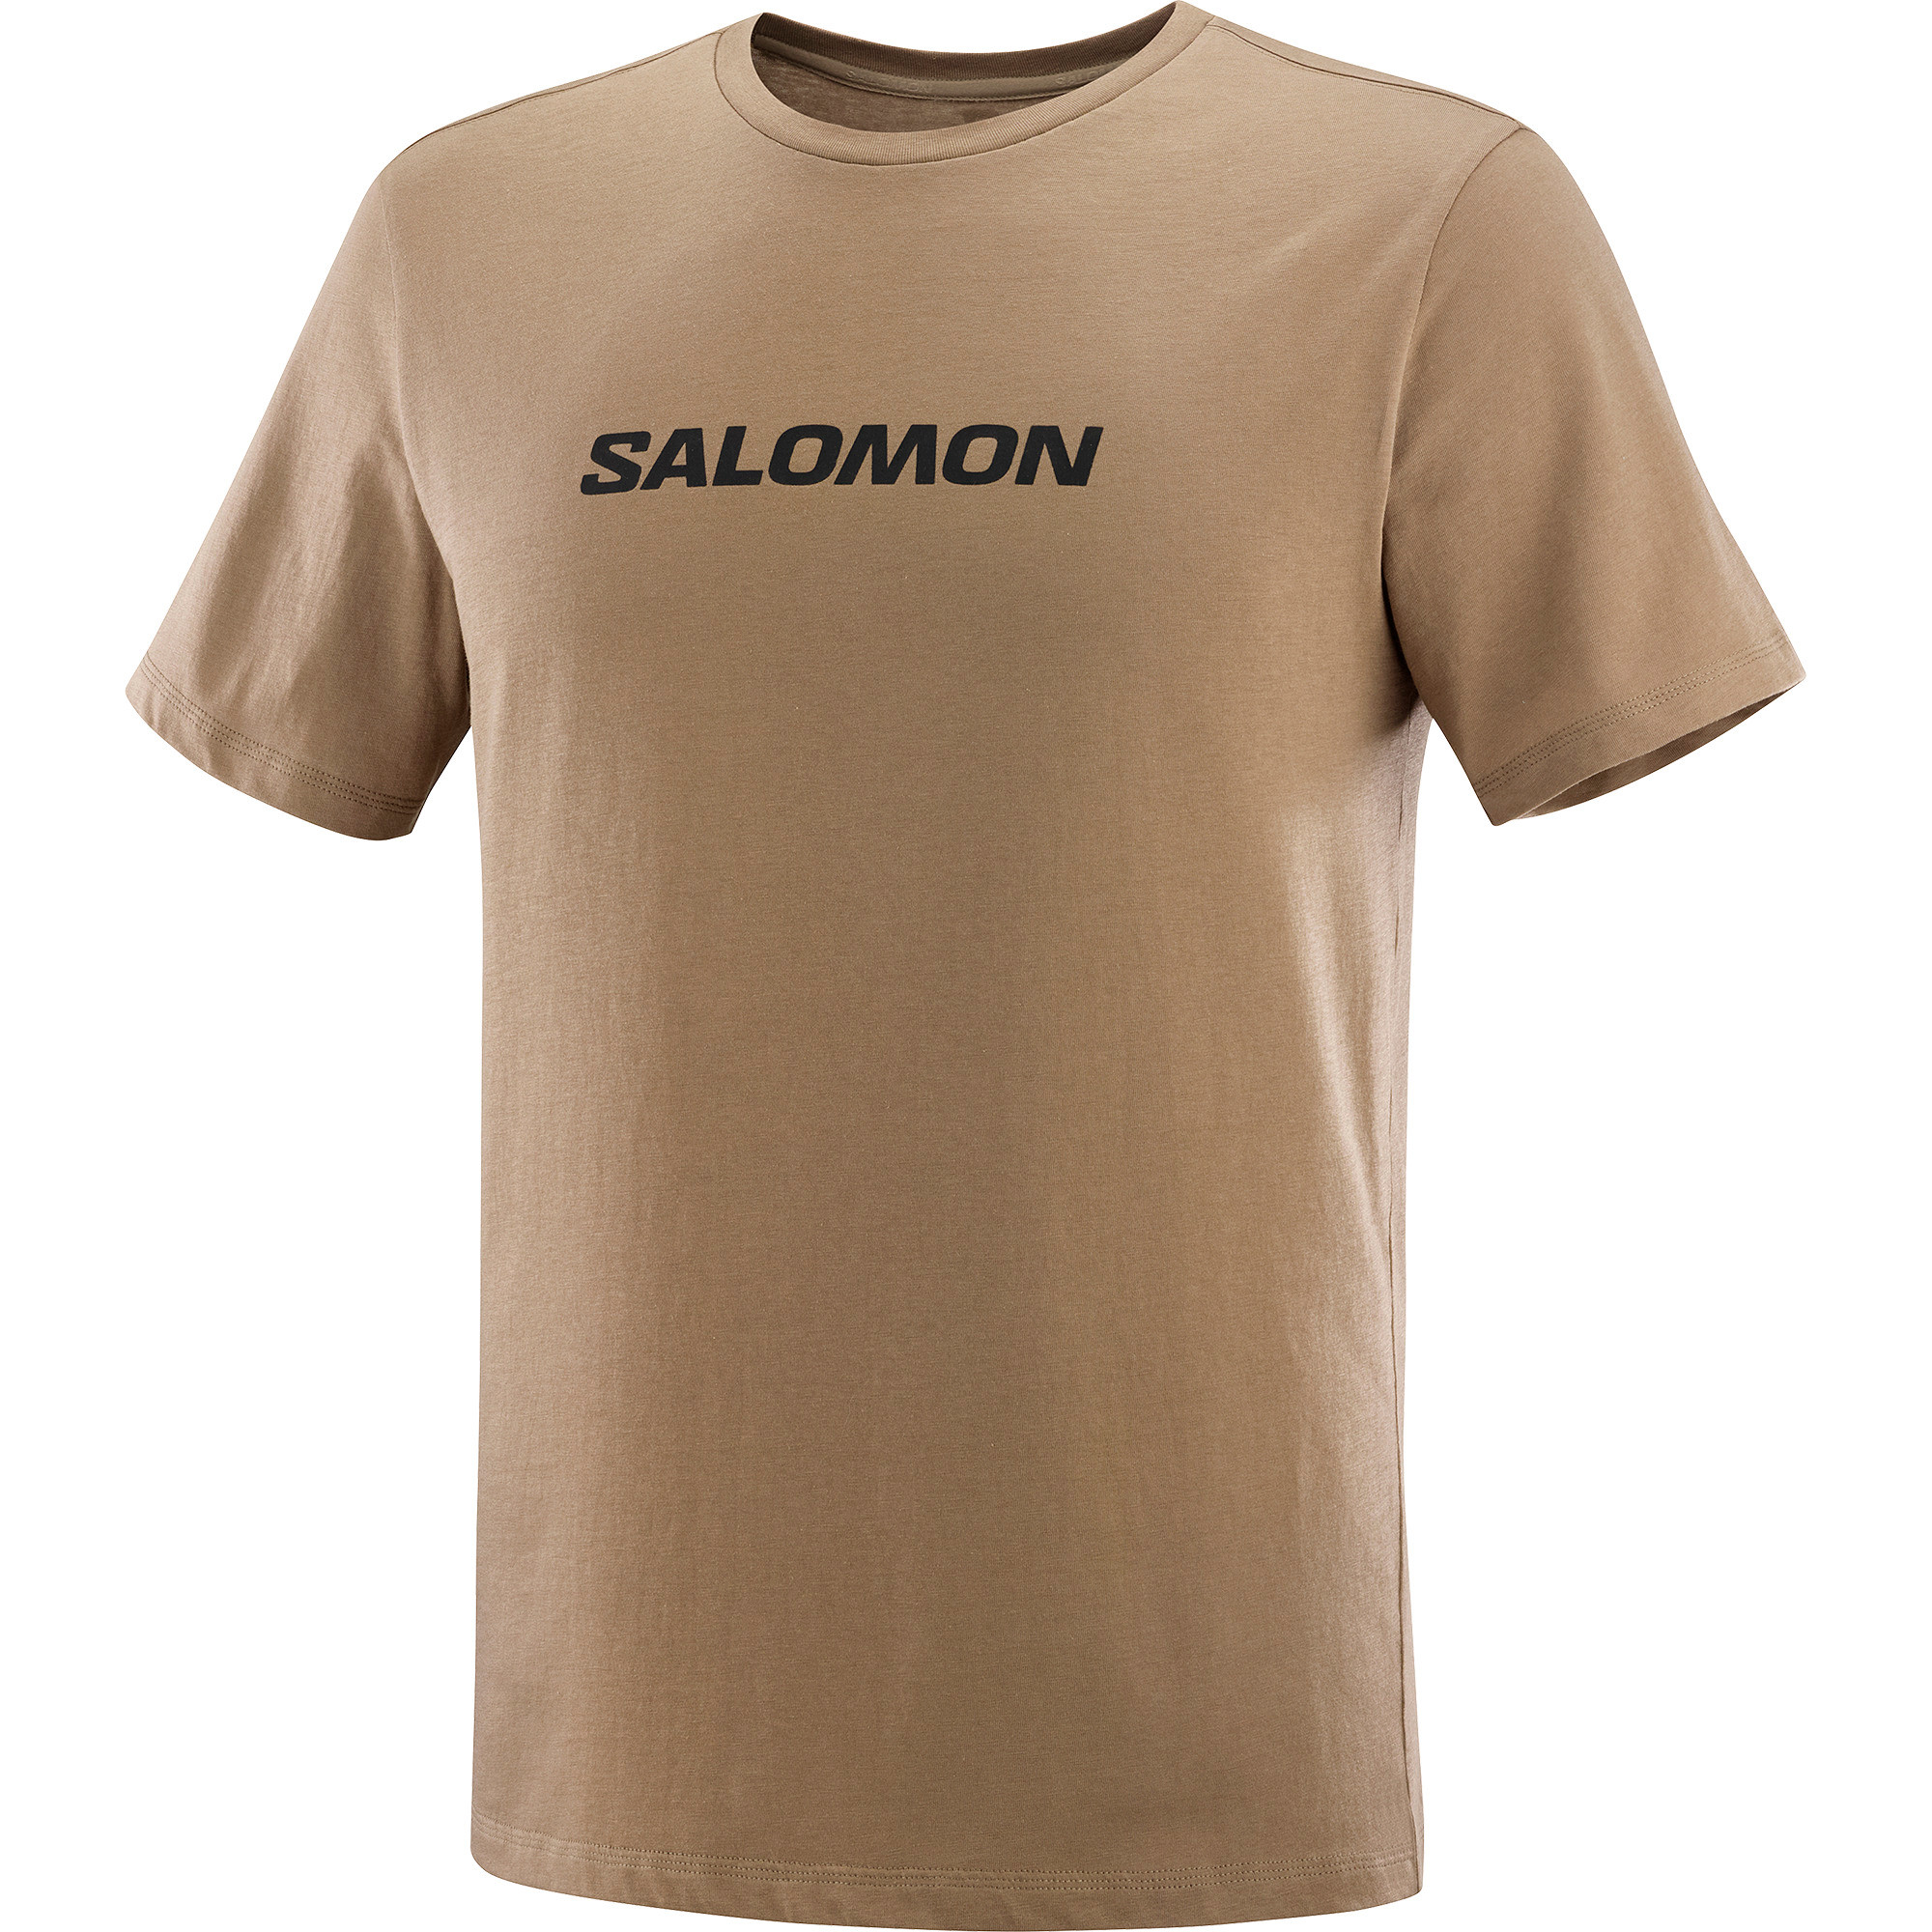 Salomon Salomon Men's Salomon Logo Performance Tee Shitake M, Shitake